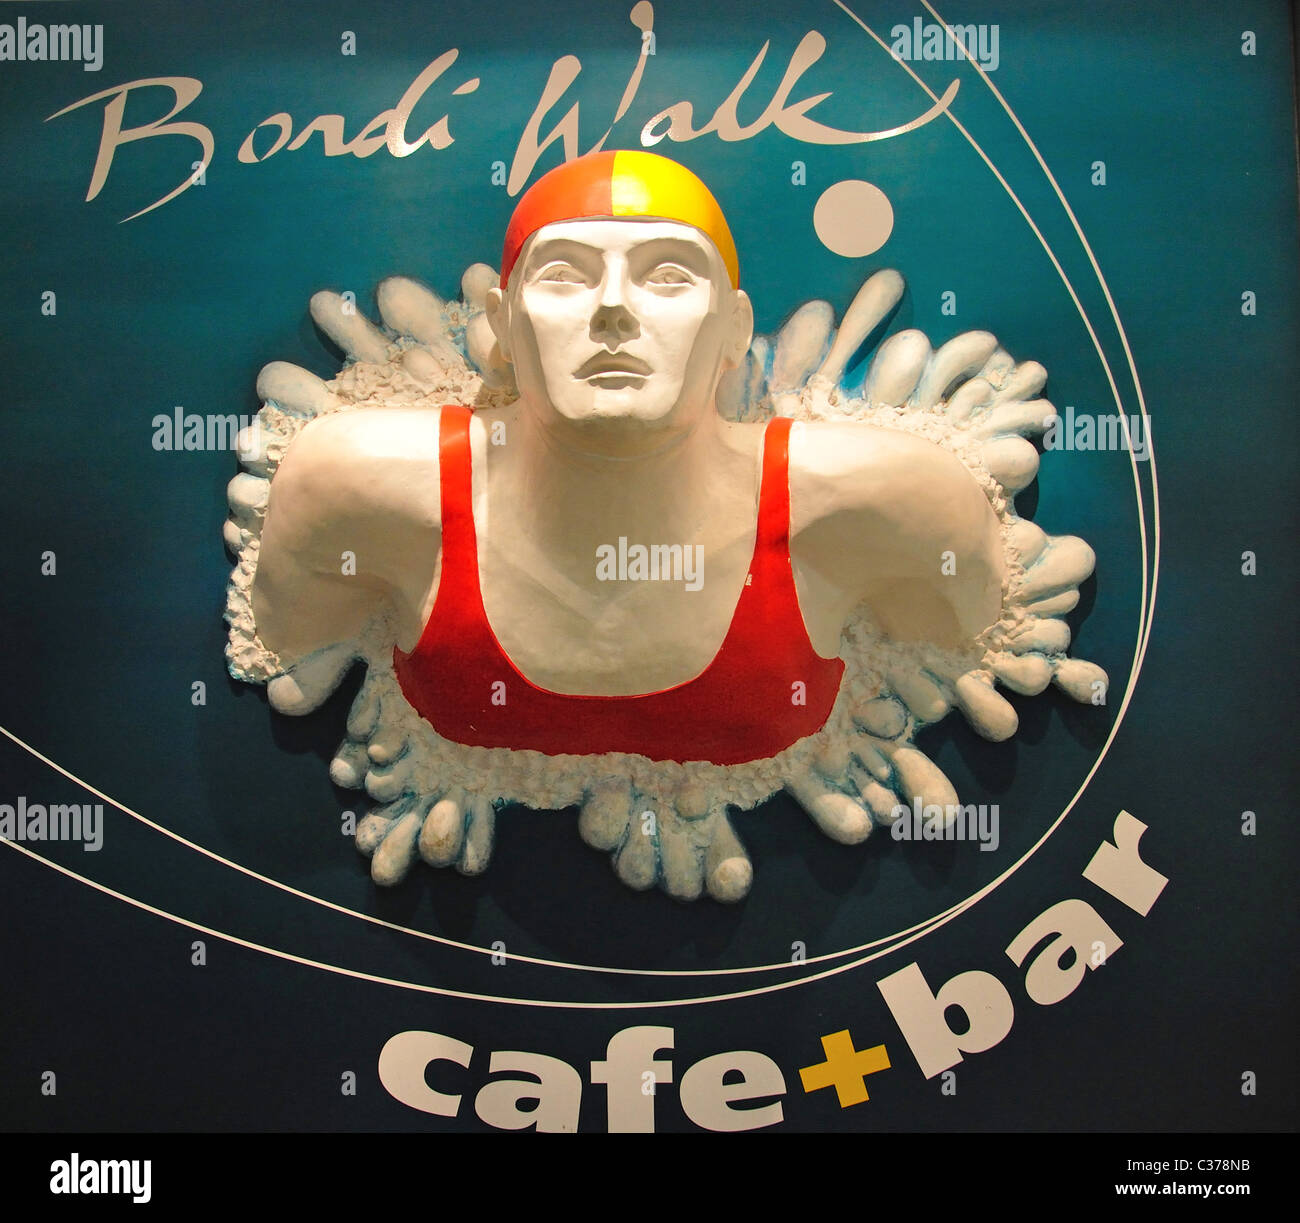 Bondi Walk Cafe Zeichen, Sydney Kingsford Smith International Airport, Sydney, New South Wales, Australien Stockfoto